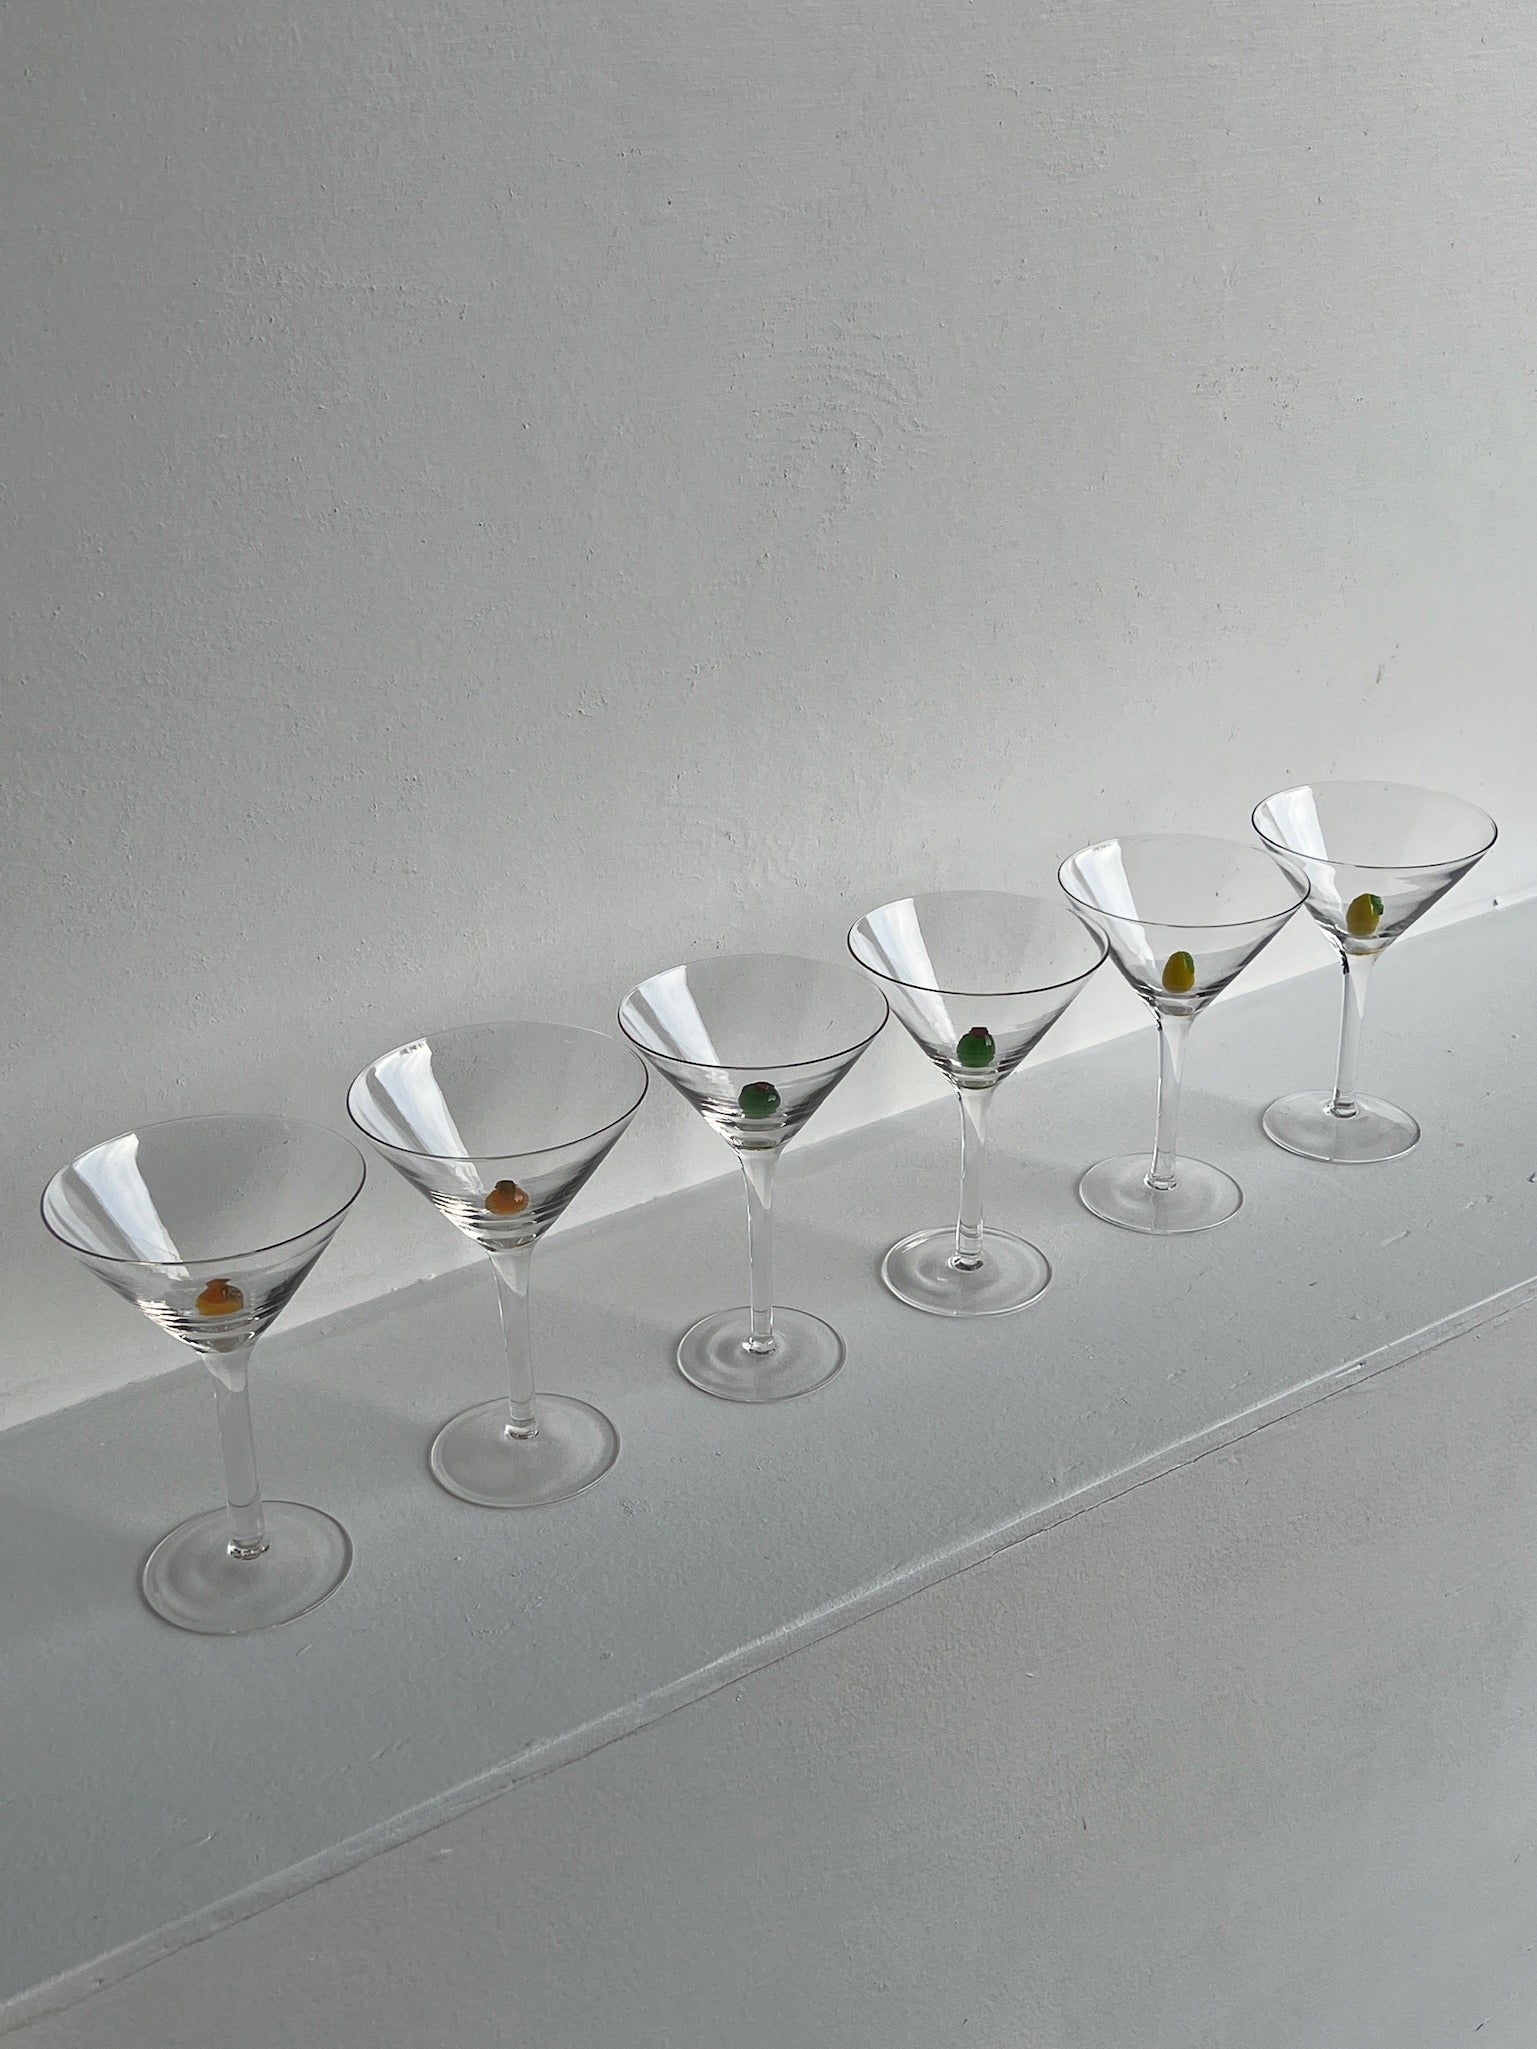 Fruit Martini Glass Set